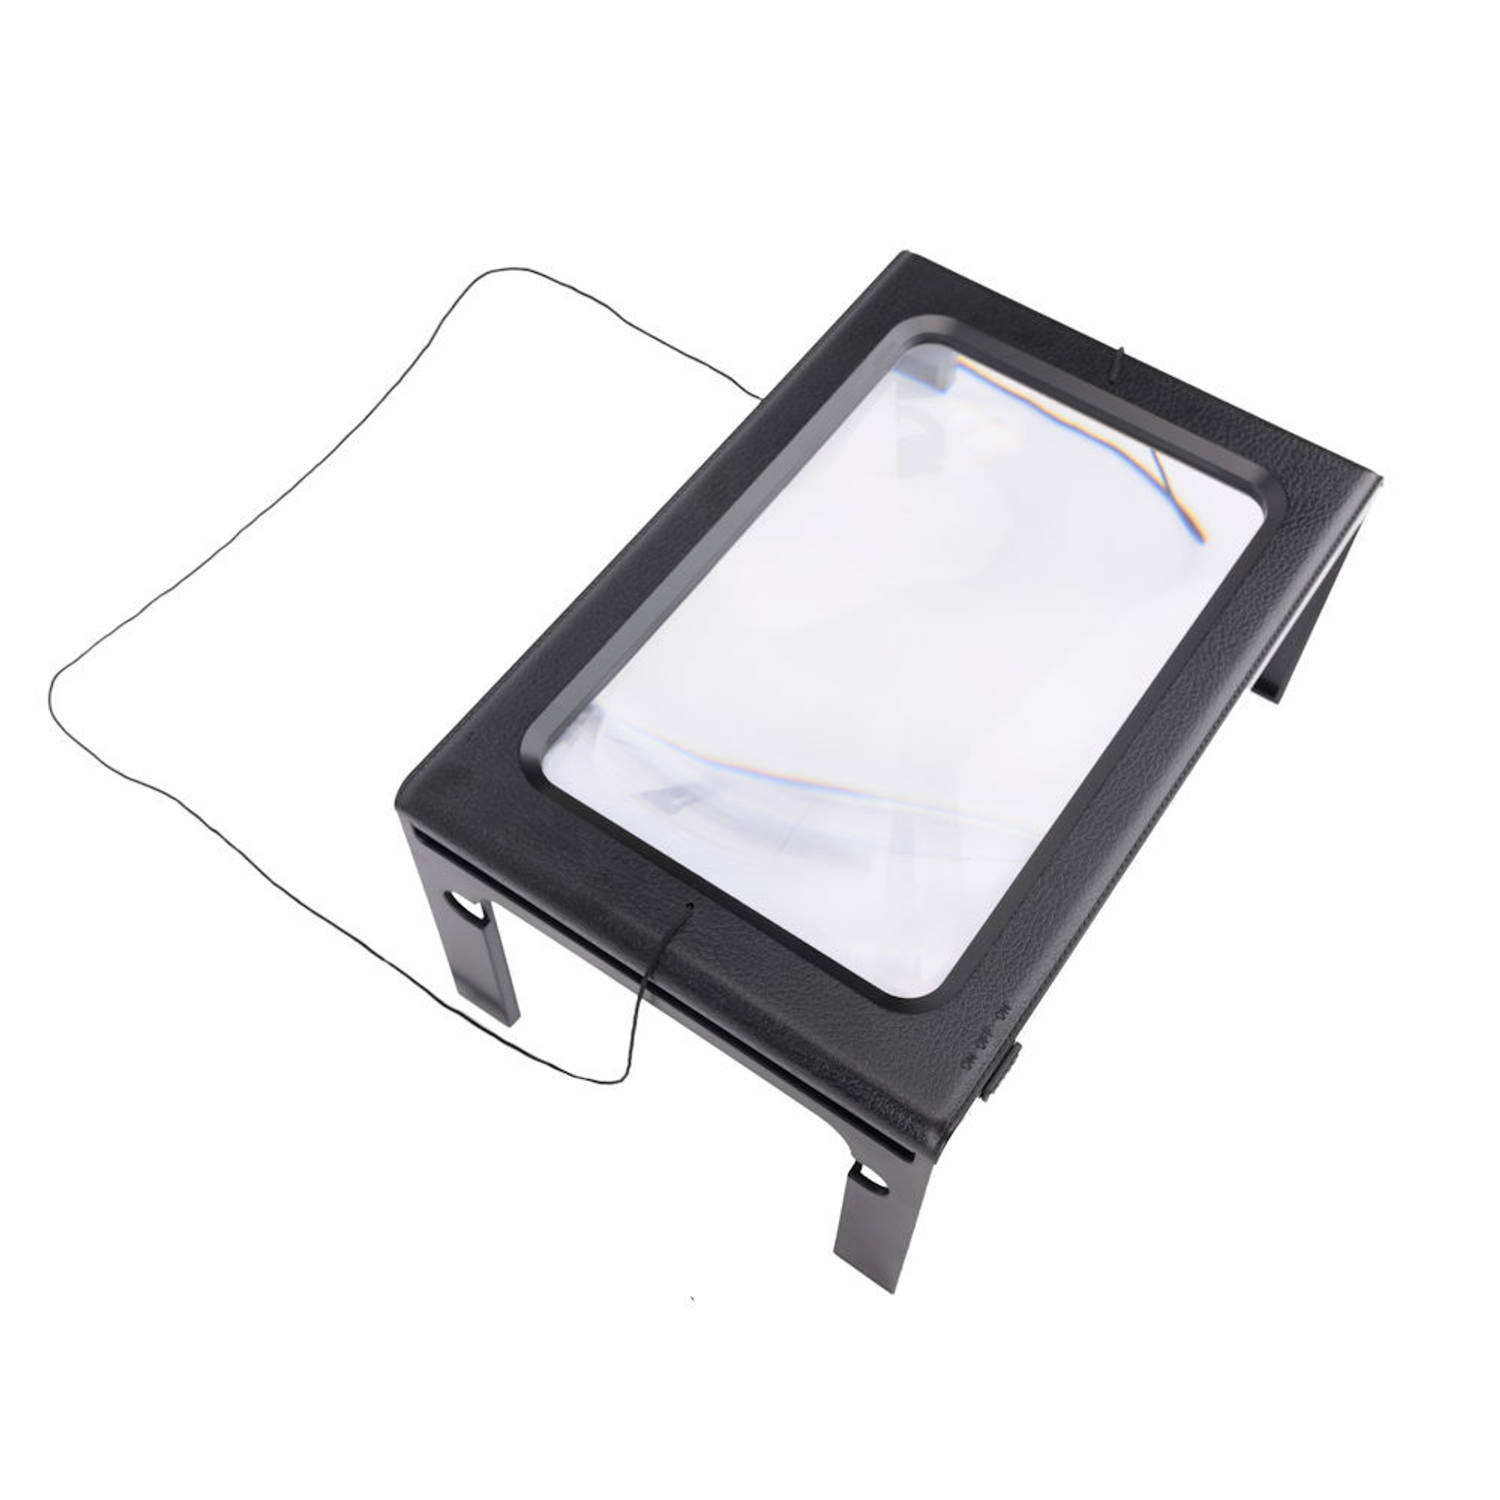 Tafel Loep - Vergrootglas met verlichting - Loep 2.5x - | Blokker